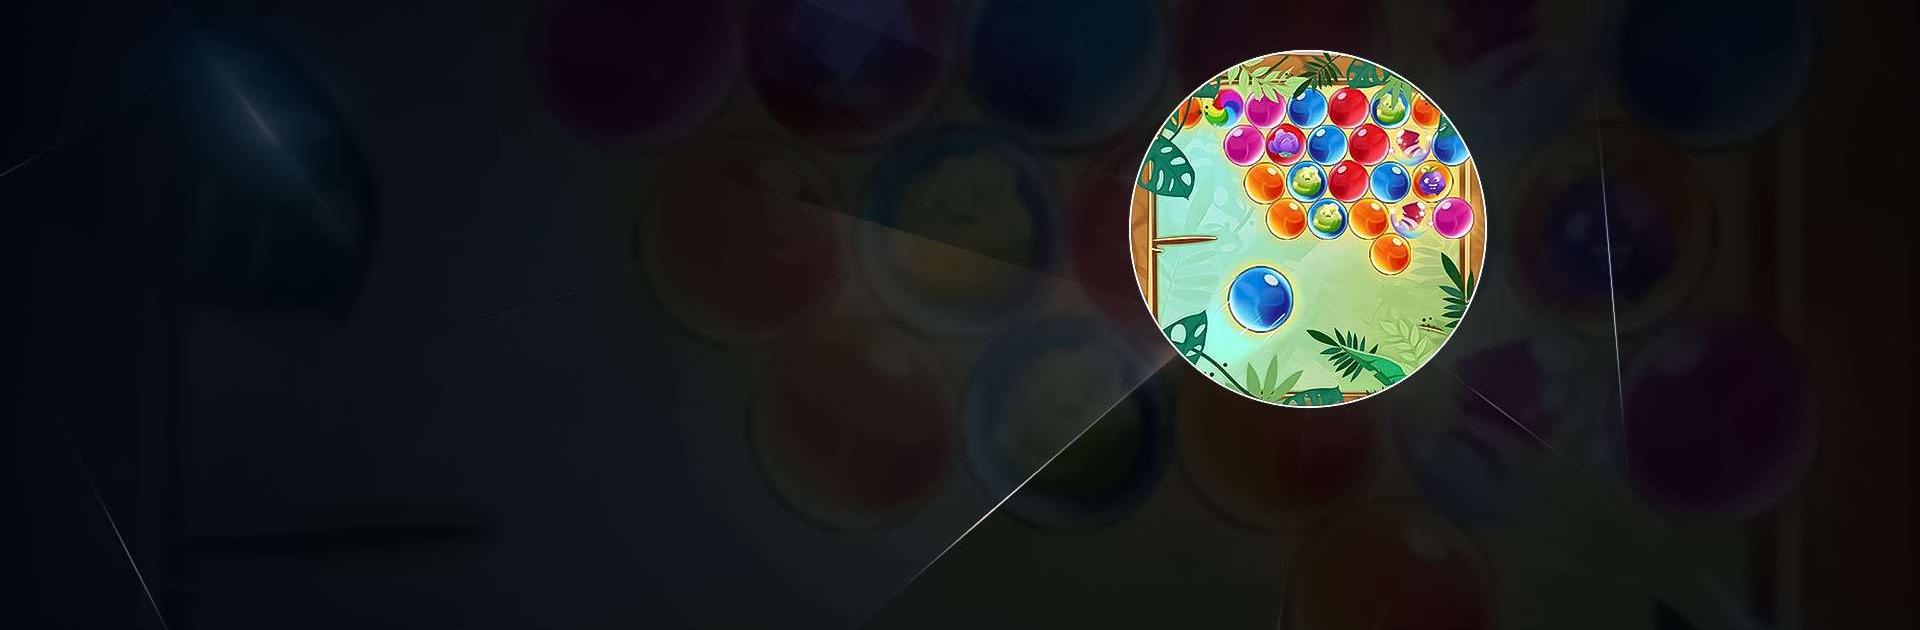 Baixar e jogar Bubble Shooter-Classic bubble Match&Puzzle Game no PC com  MuMu Player